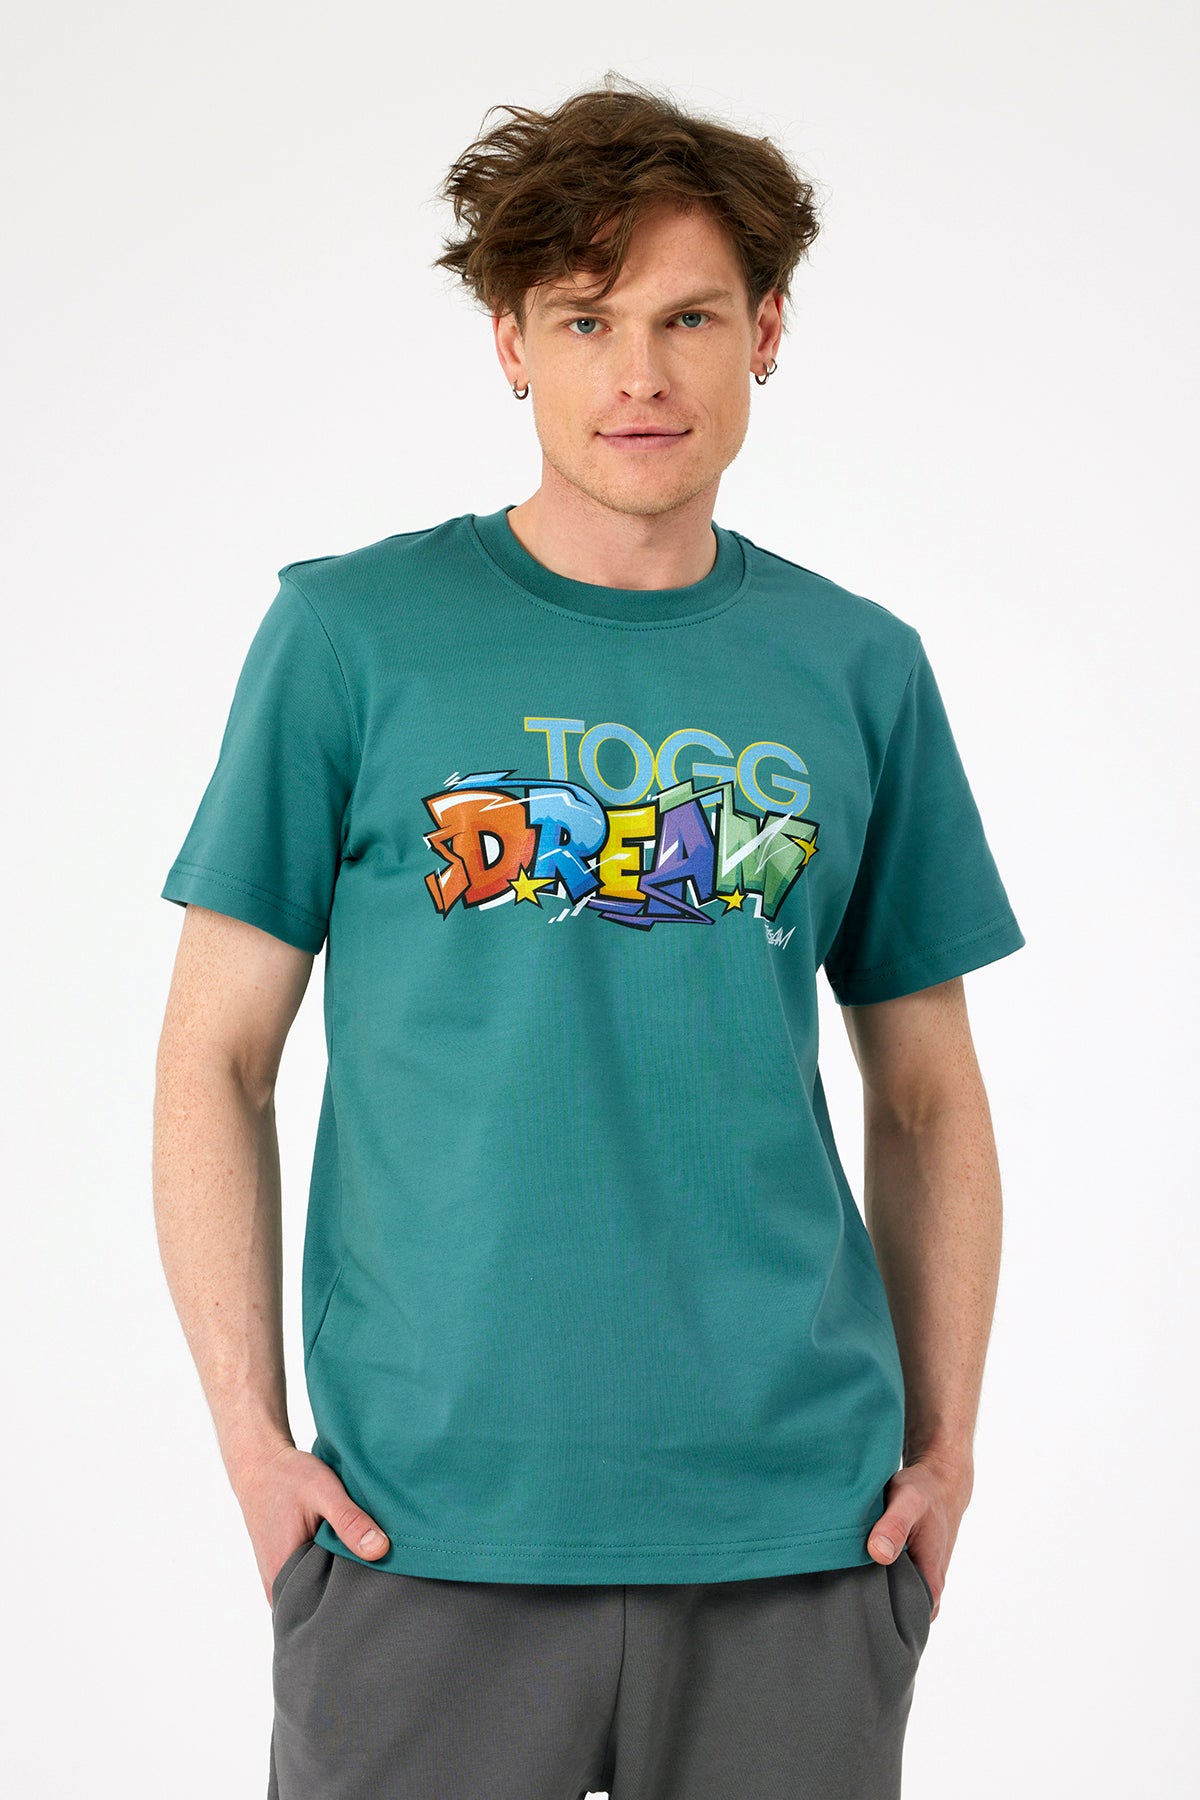 Togg Dream t-shirt